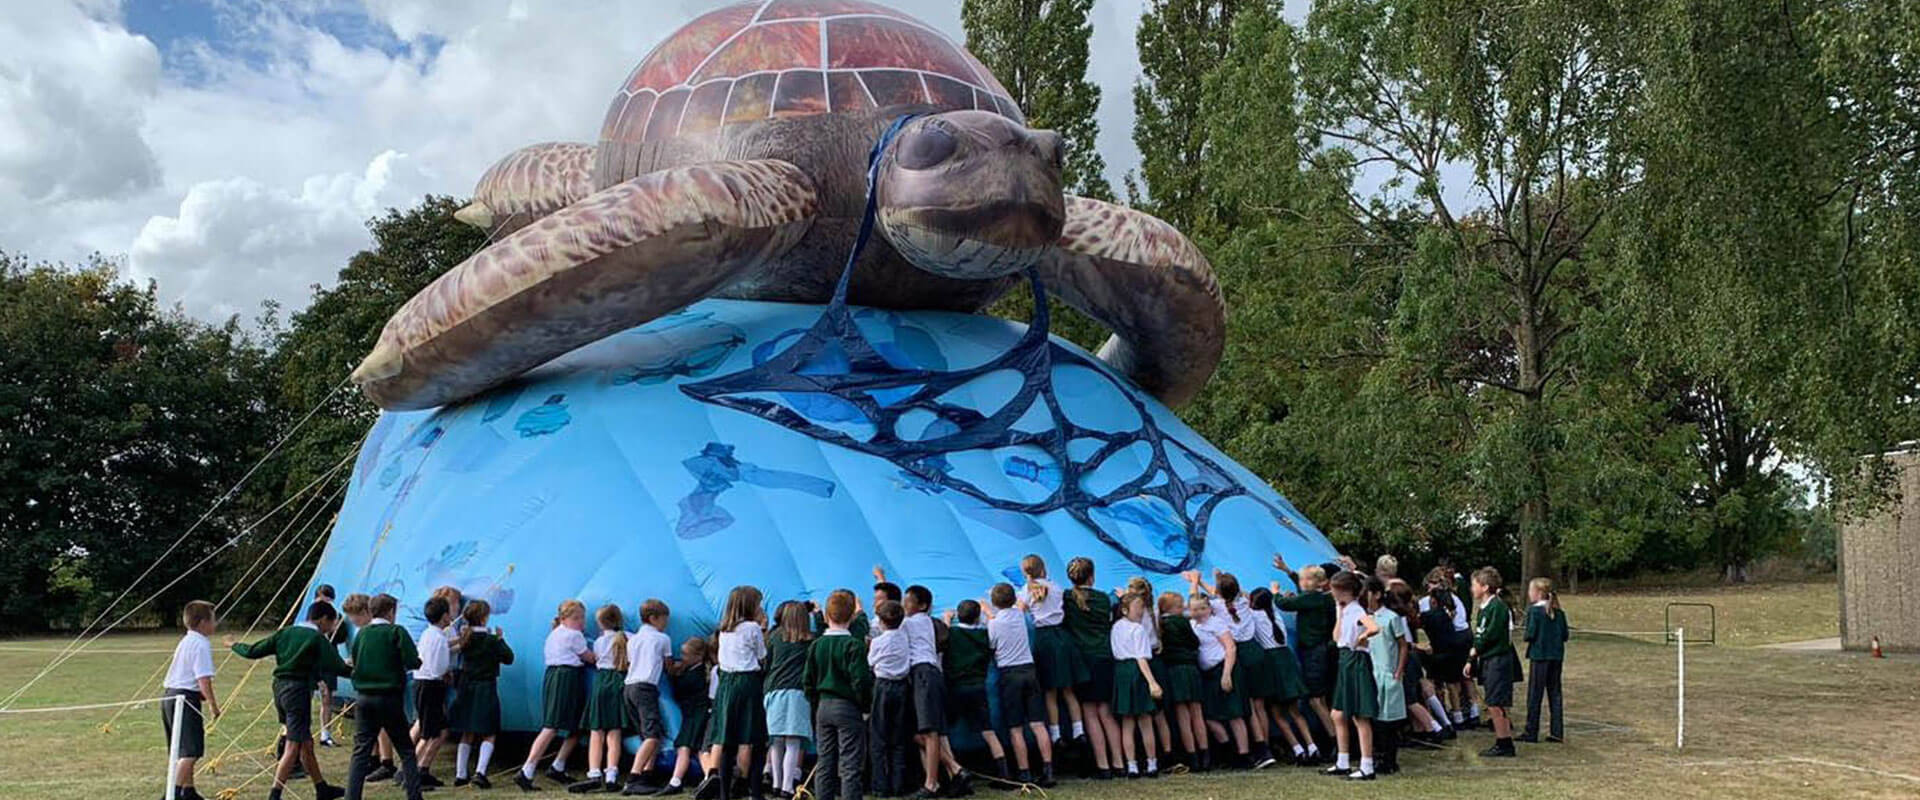 Inflatable Turtle